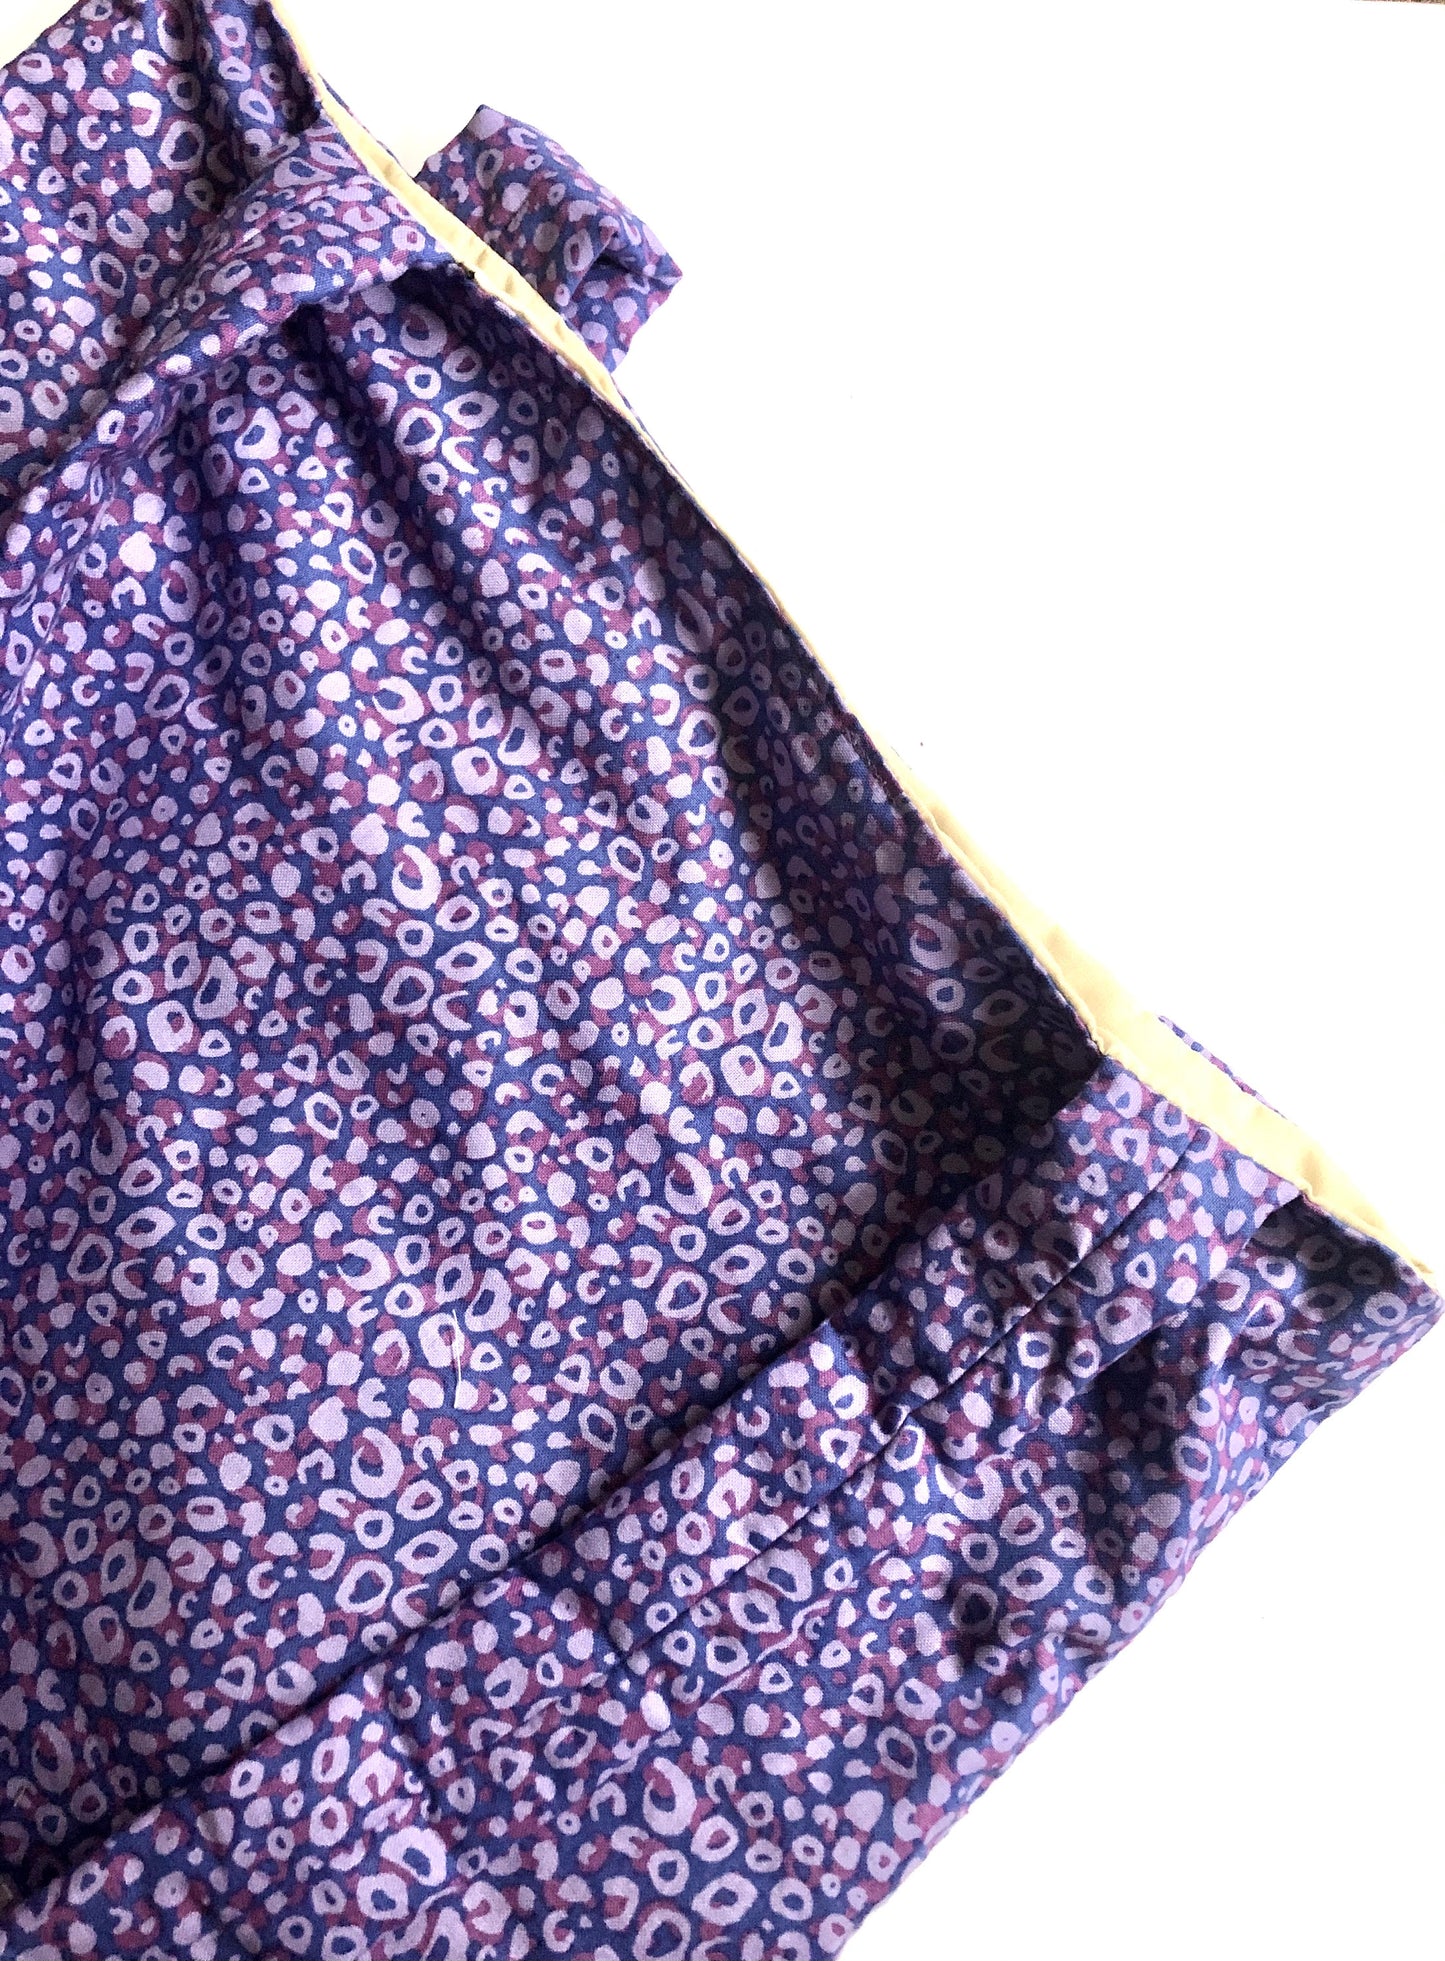 Large Tote Bag, zero waste gifts, Purple Leopard Print Bag